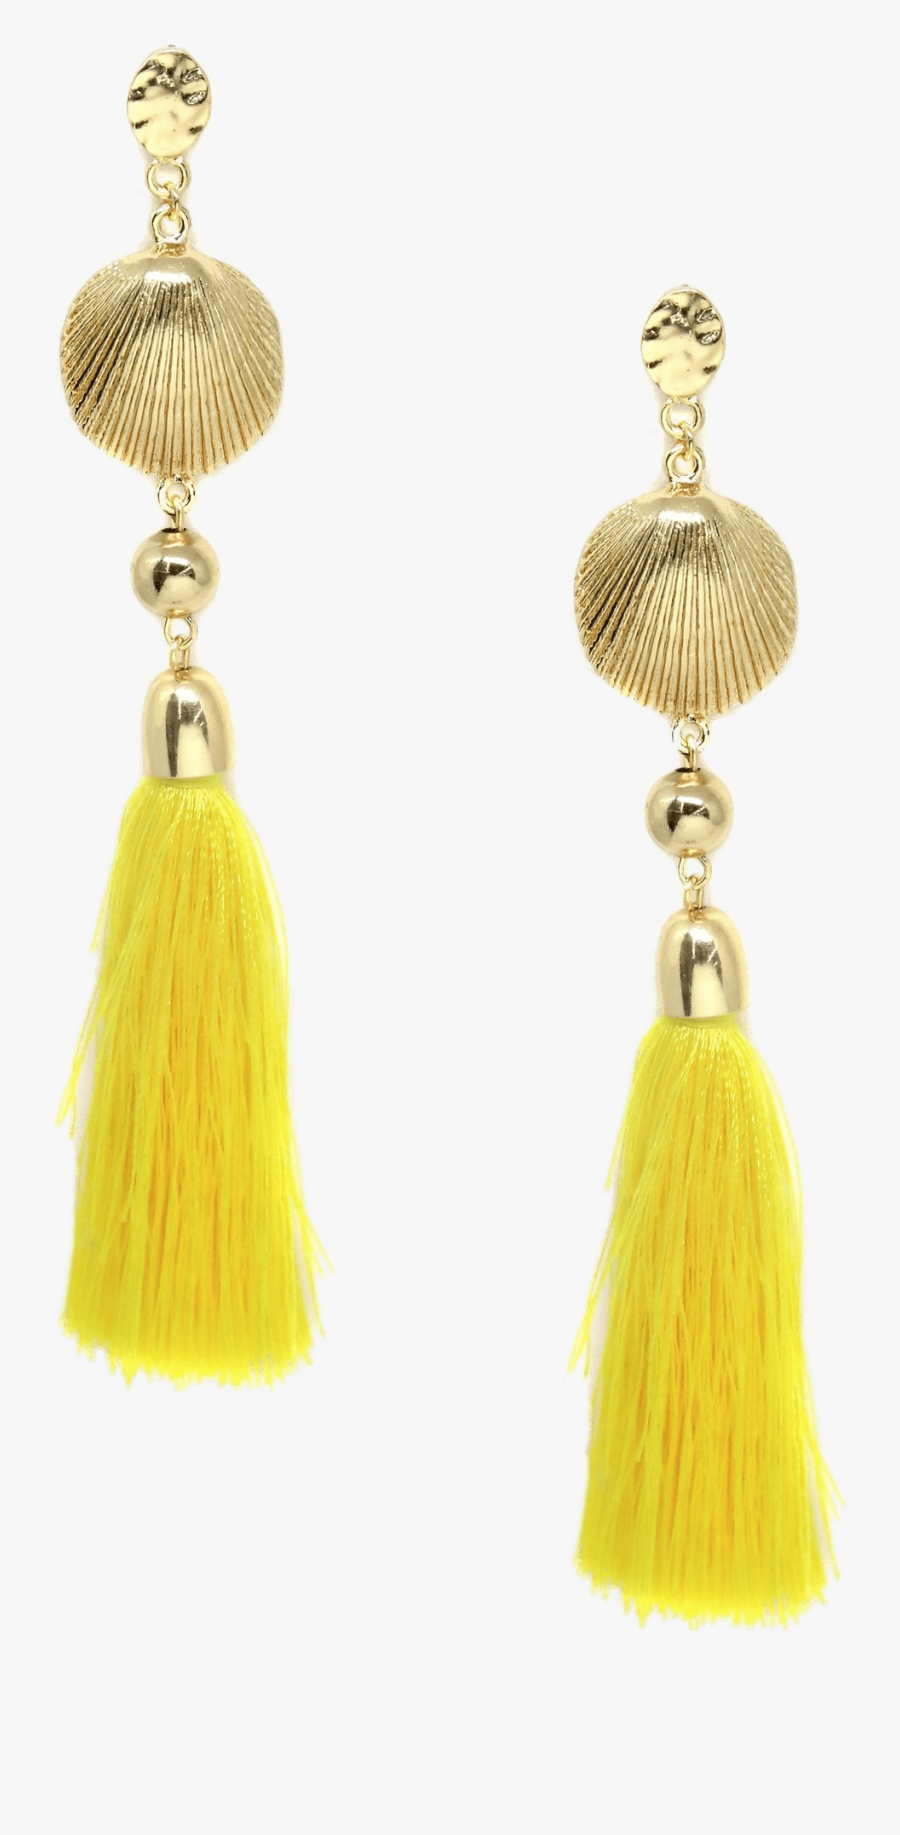 Yellow Tassel Earrings - Earring Yellow Tassel Png, Transparent Clipart